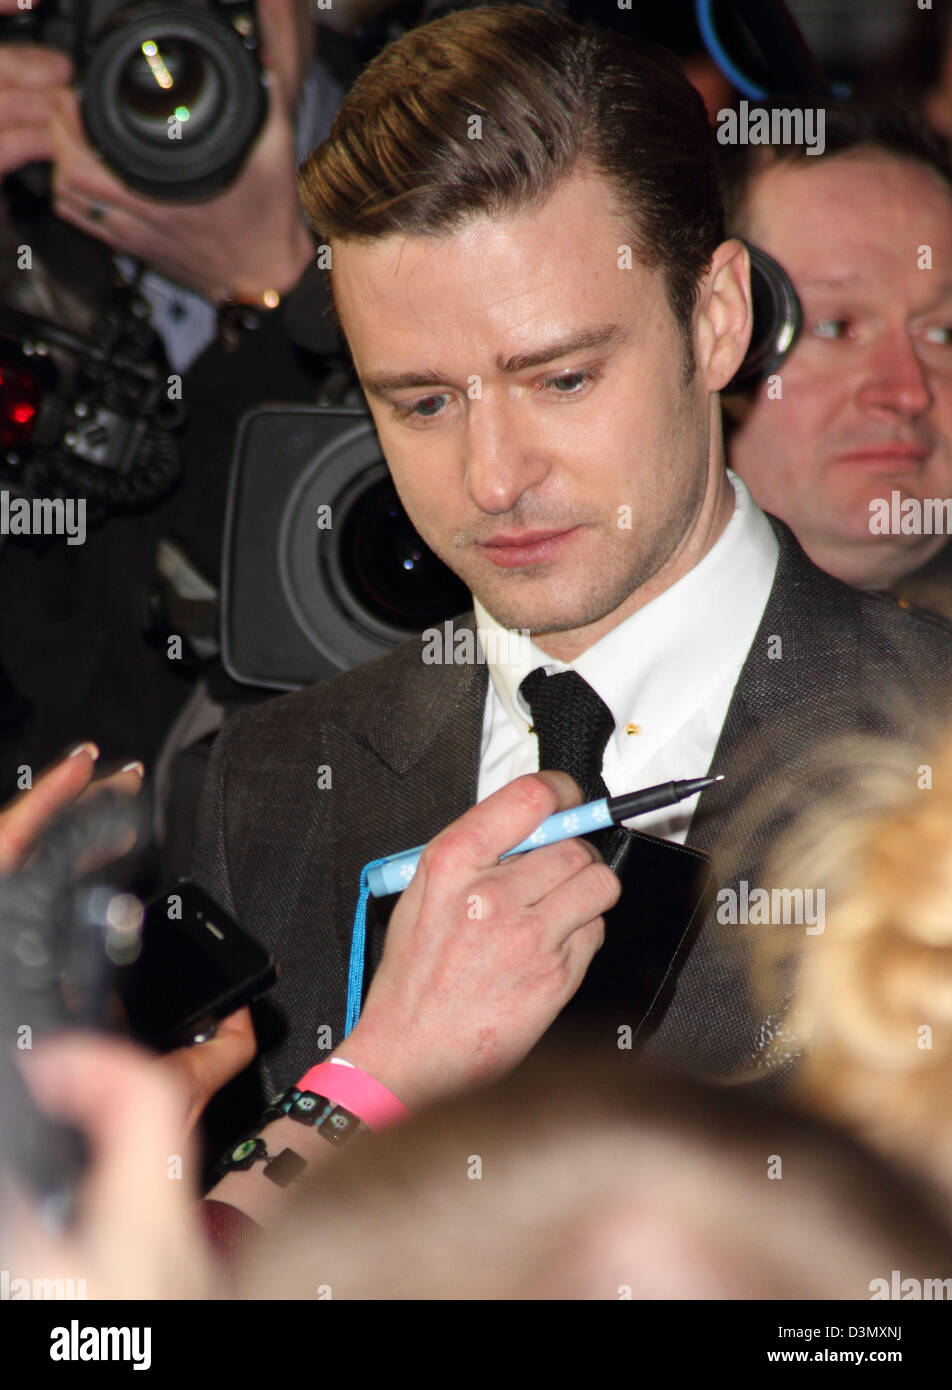 London, UK. 20th February 2013. Justin Timberlake at the The 2013 Brit Awards at the O2 Arena, London - February 20th 2013  Photo by Keith Mayhew/ Alamy Live News Stock Photo